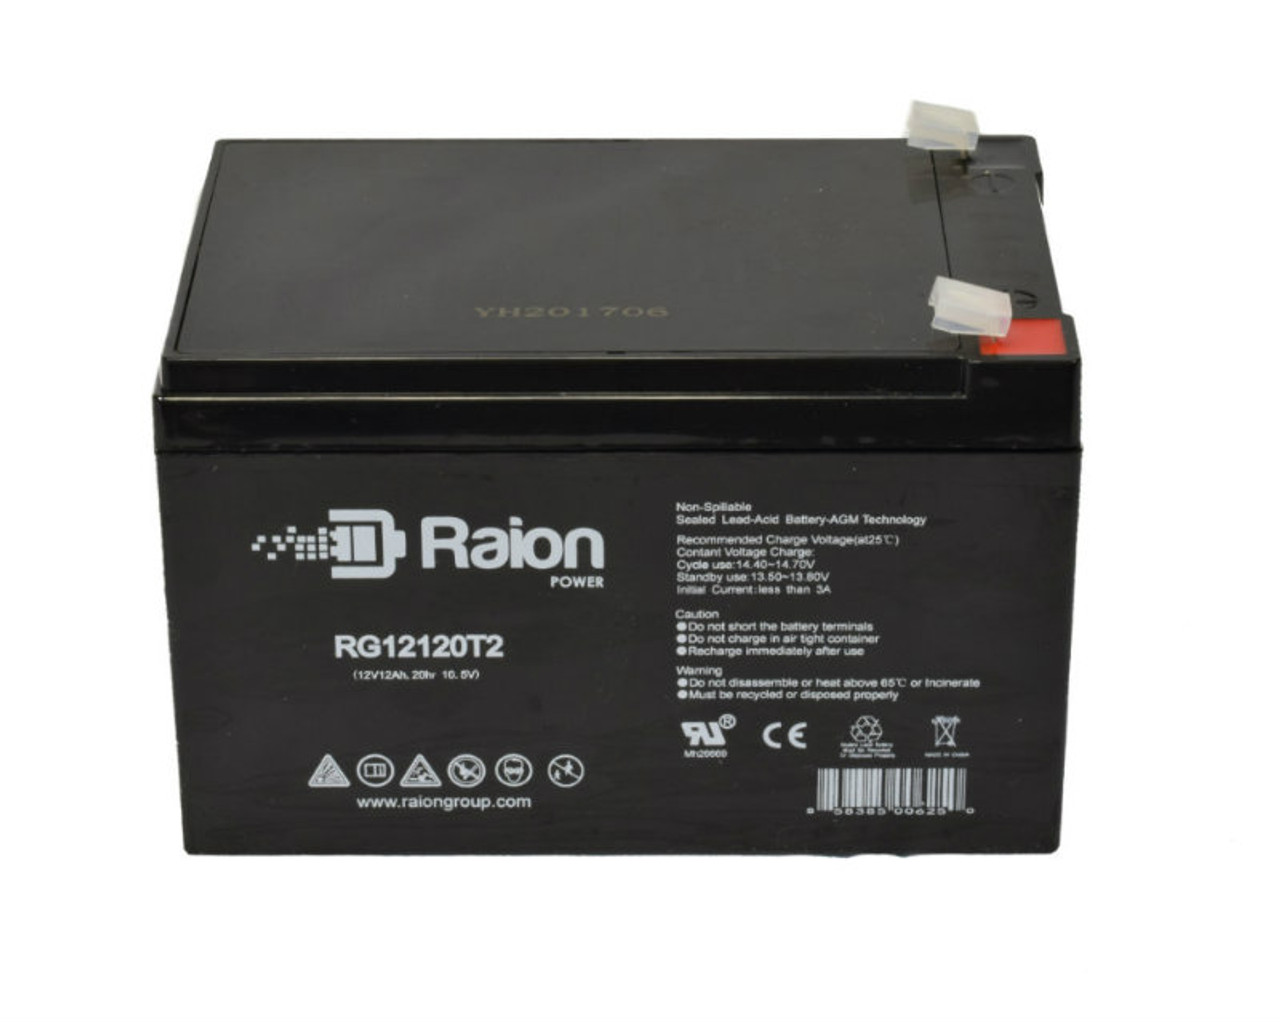 Raion Power RG12120T2 SLA Battery for Napel NP12140